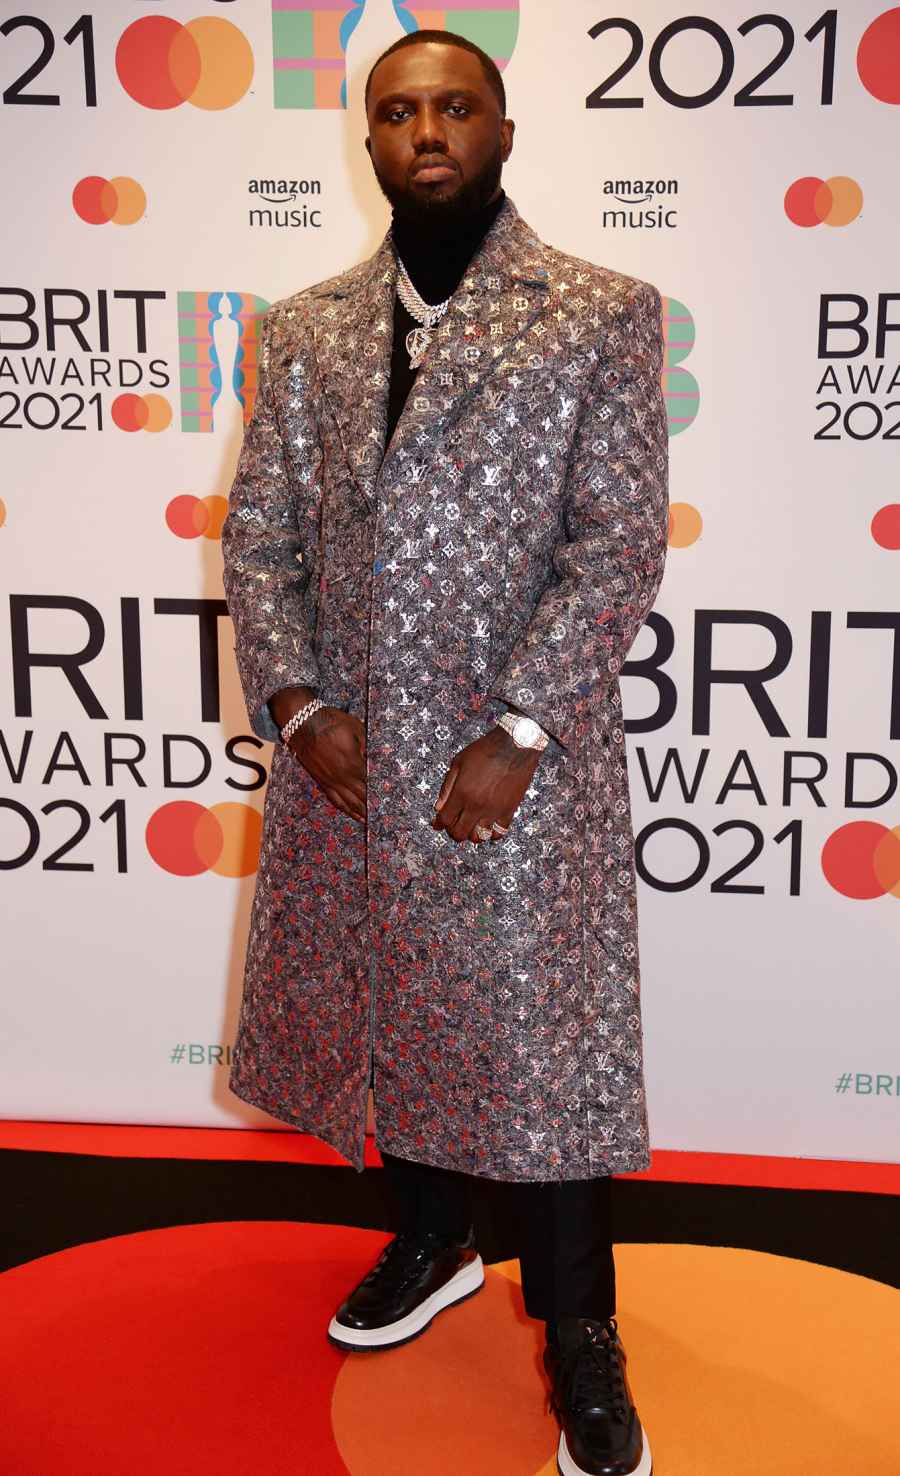 2021 BRIT Awards Red Carpet Arrivals - Headie One